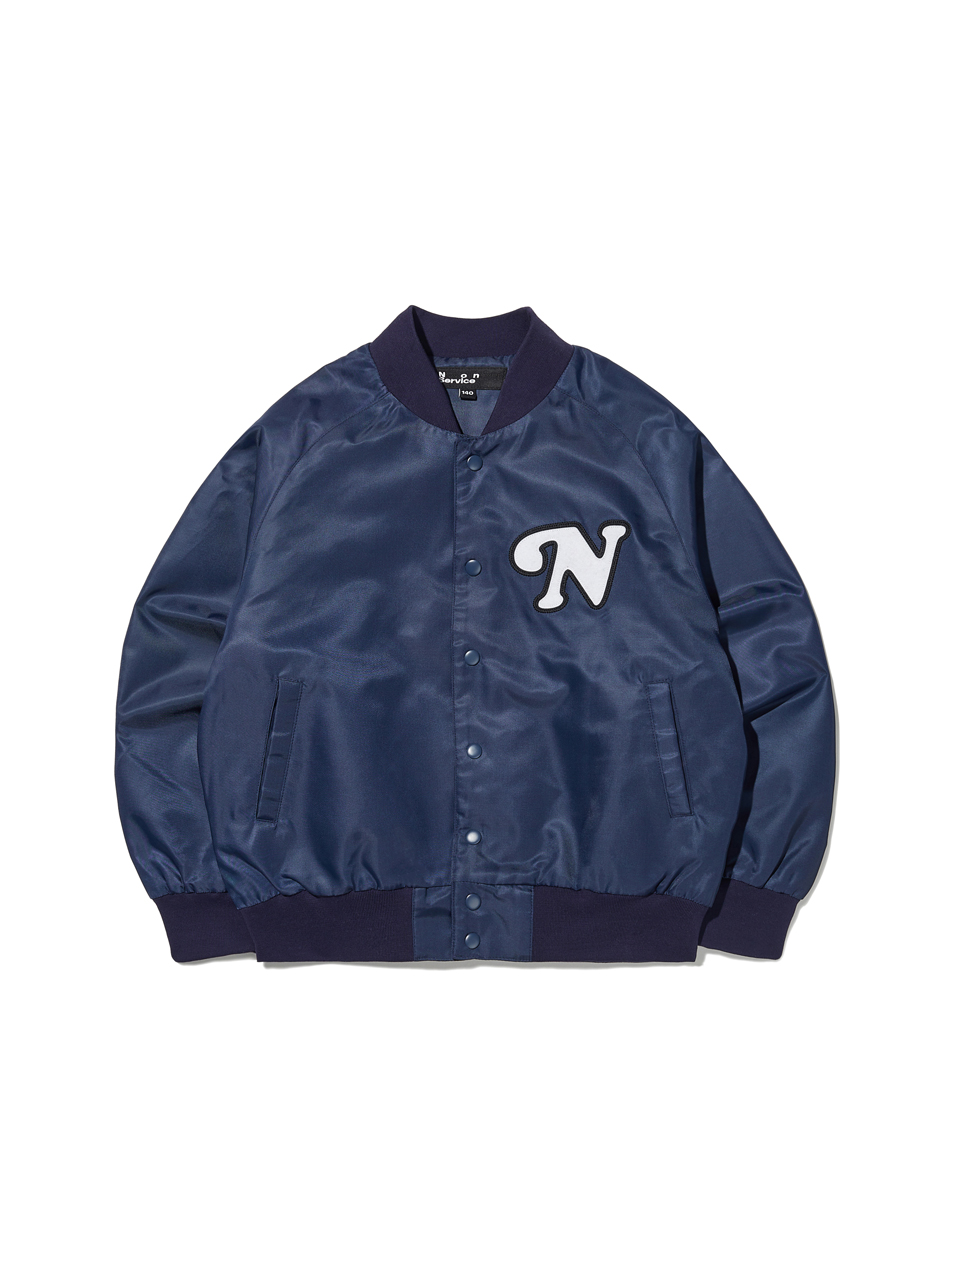 Over Fit N Logo Varsity Jacket Navy